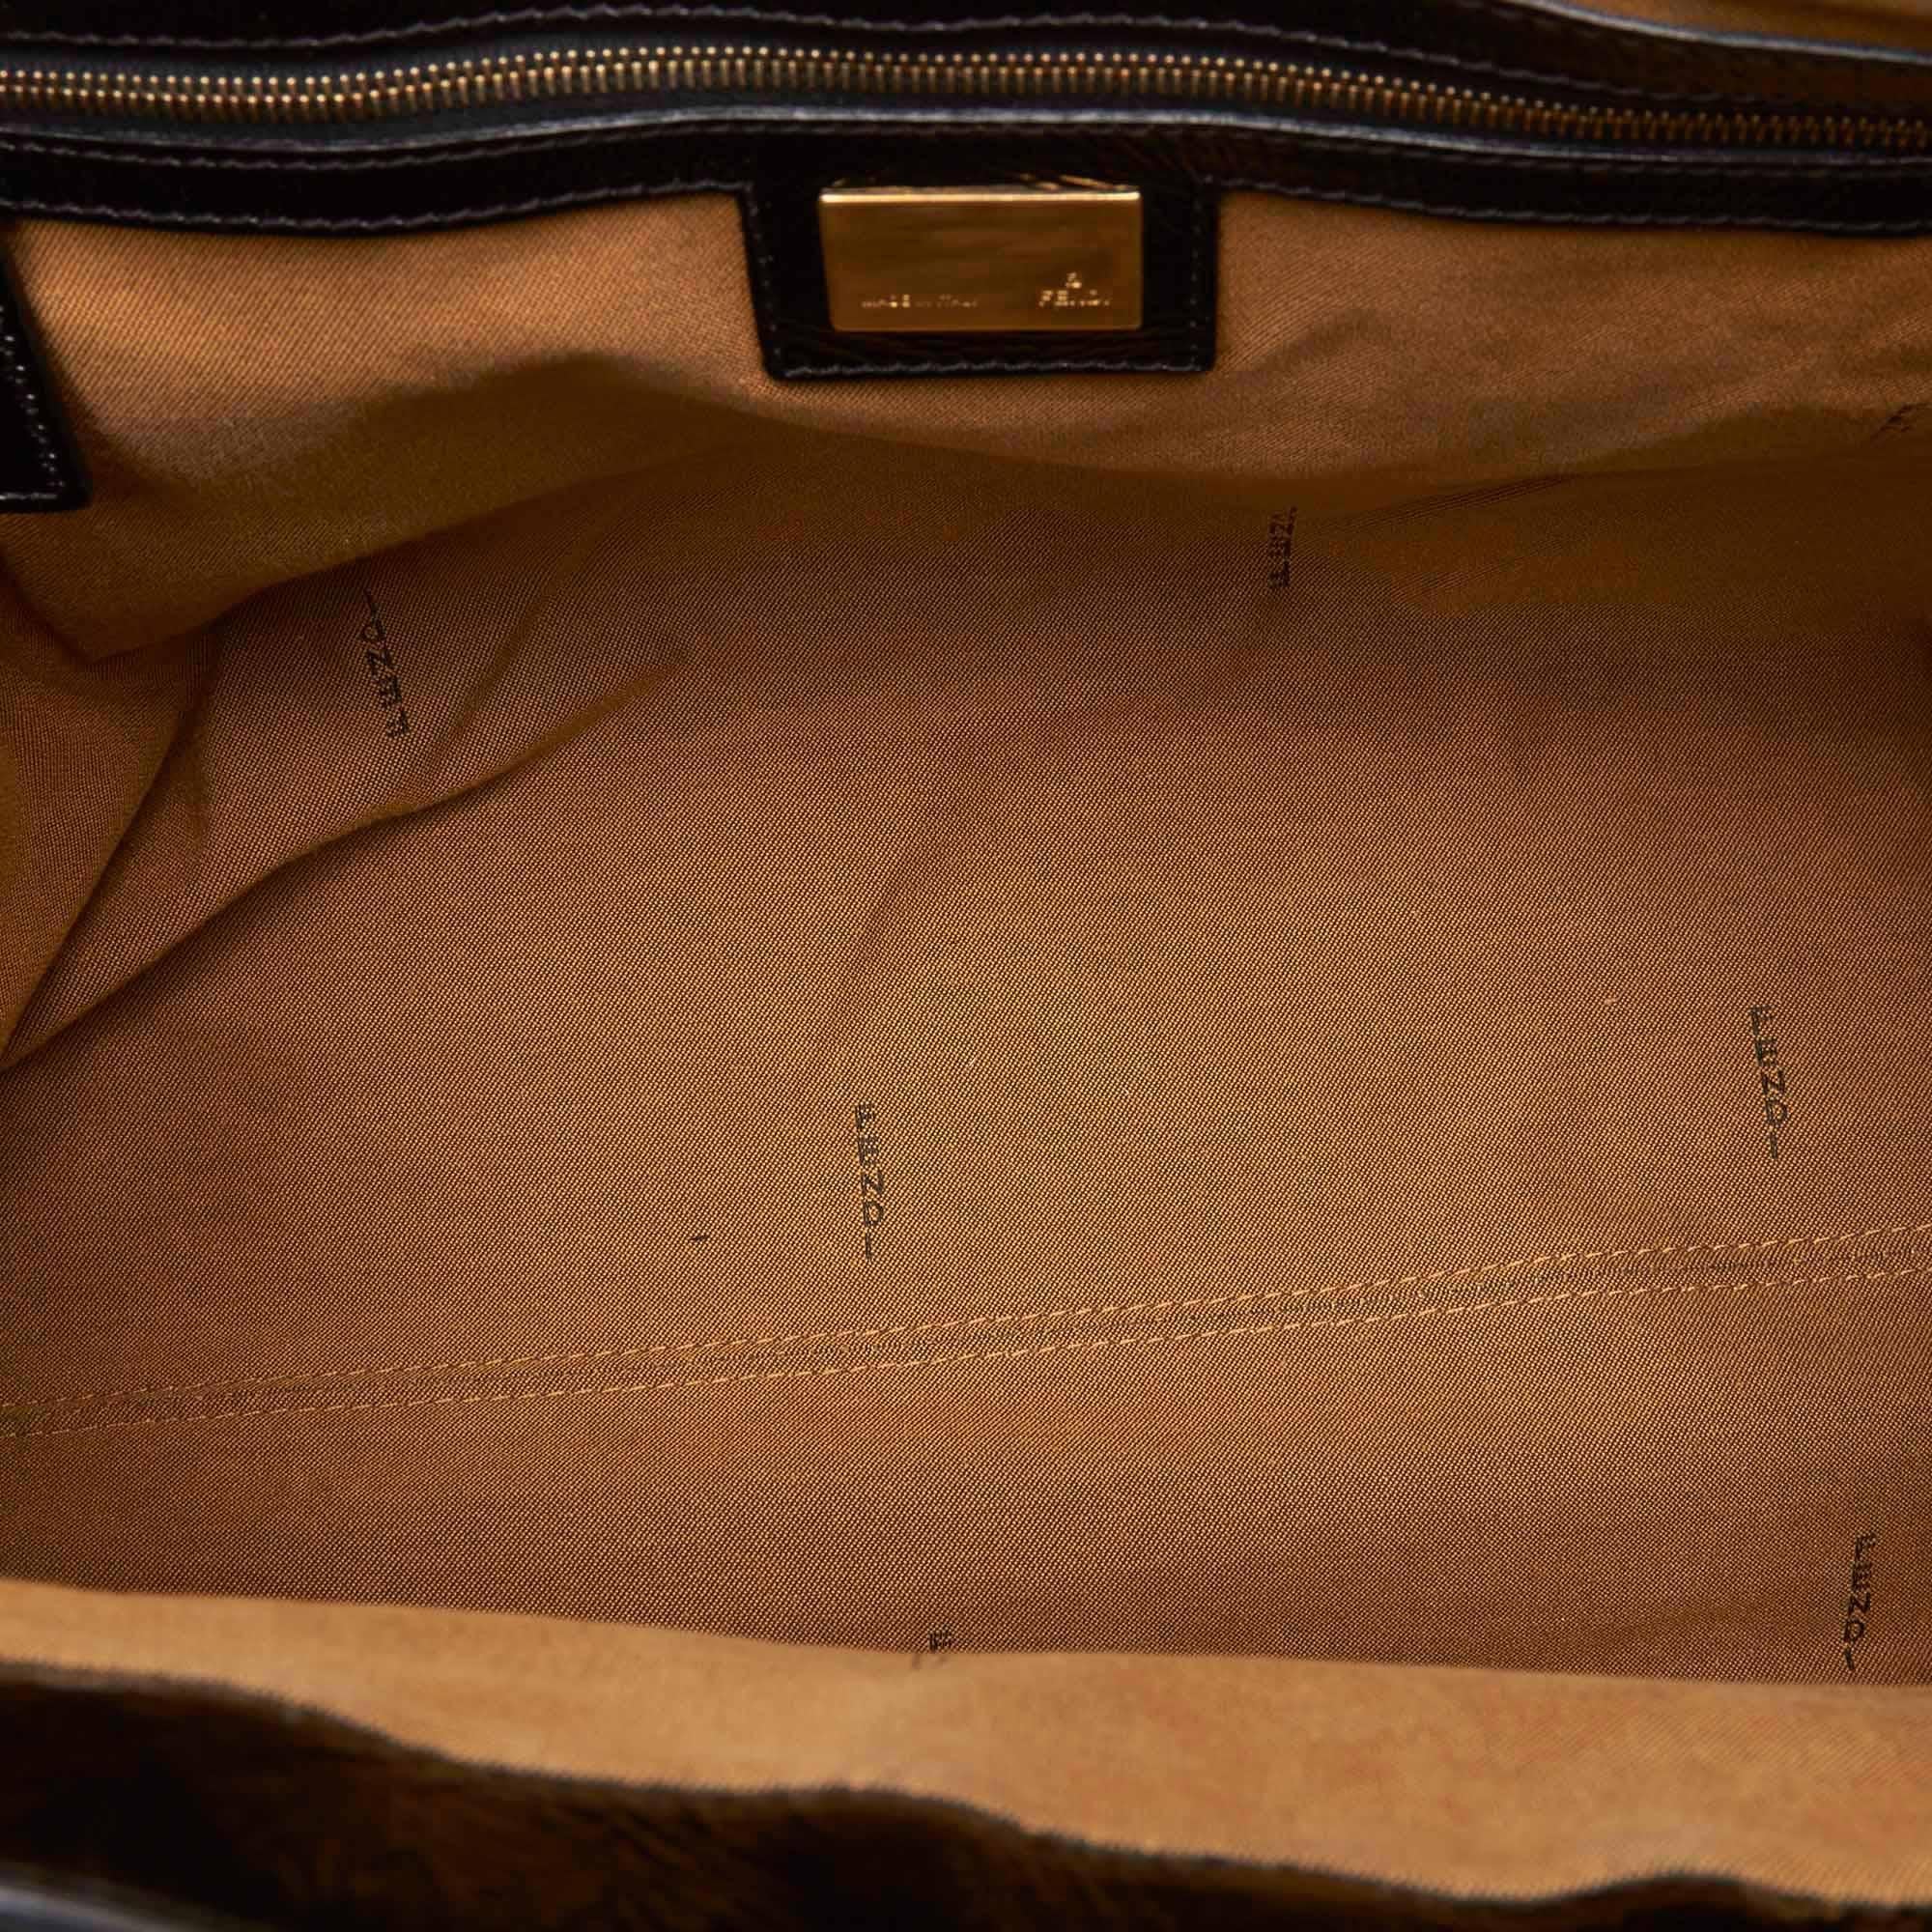 Fendi Black Patent Leather Bag Du Jour Tote 1